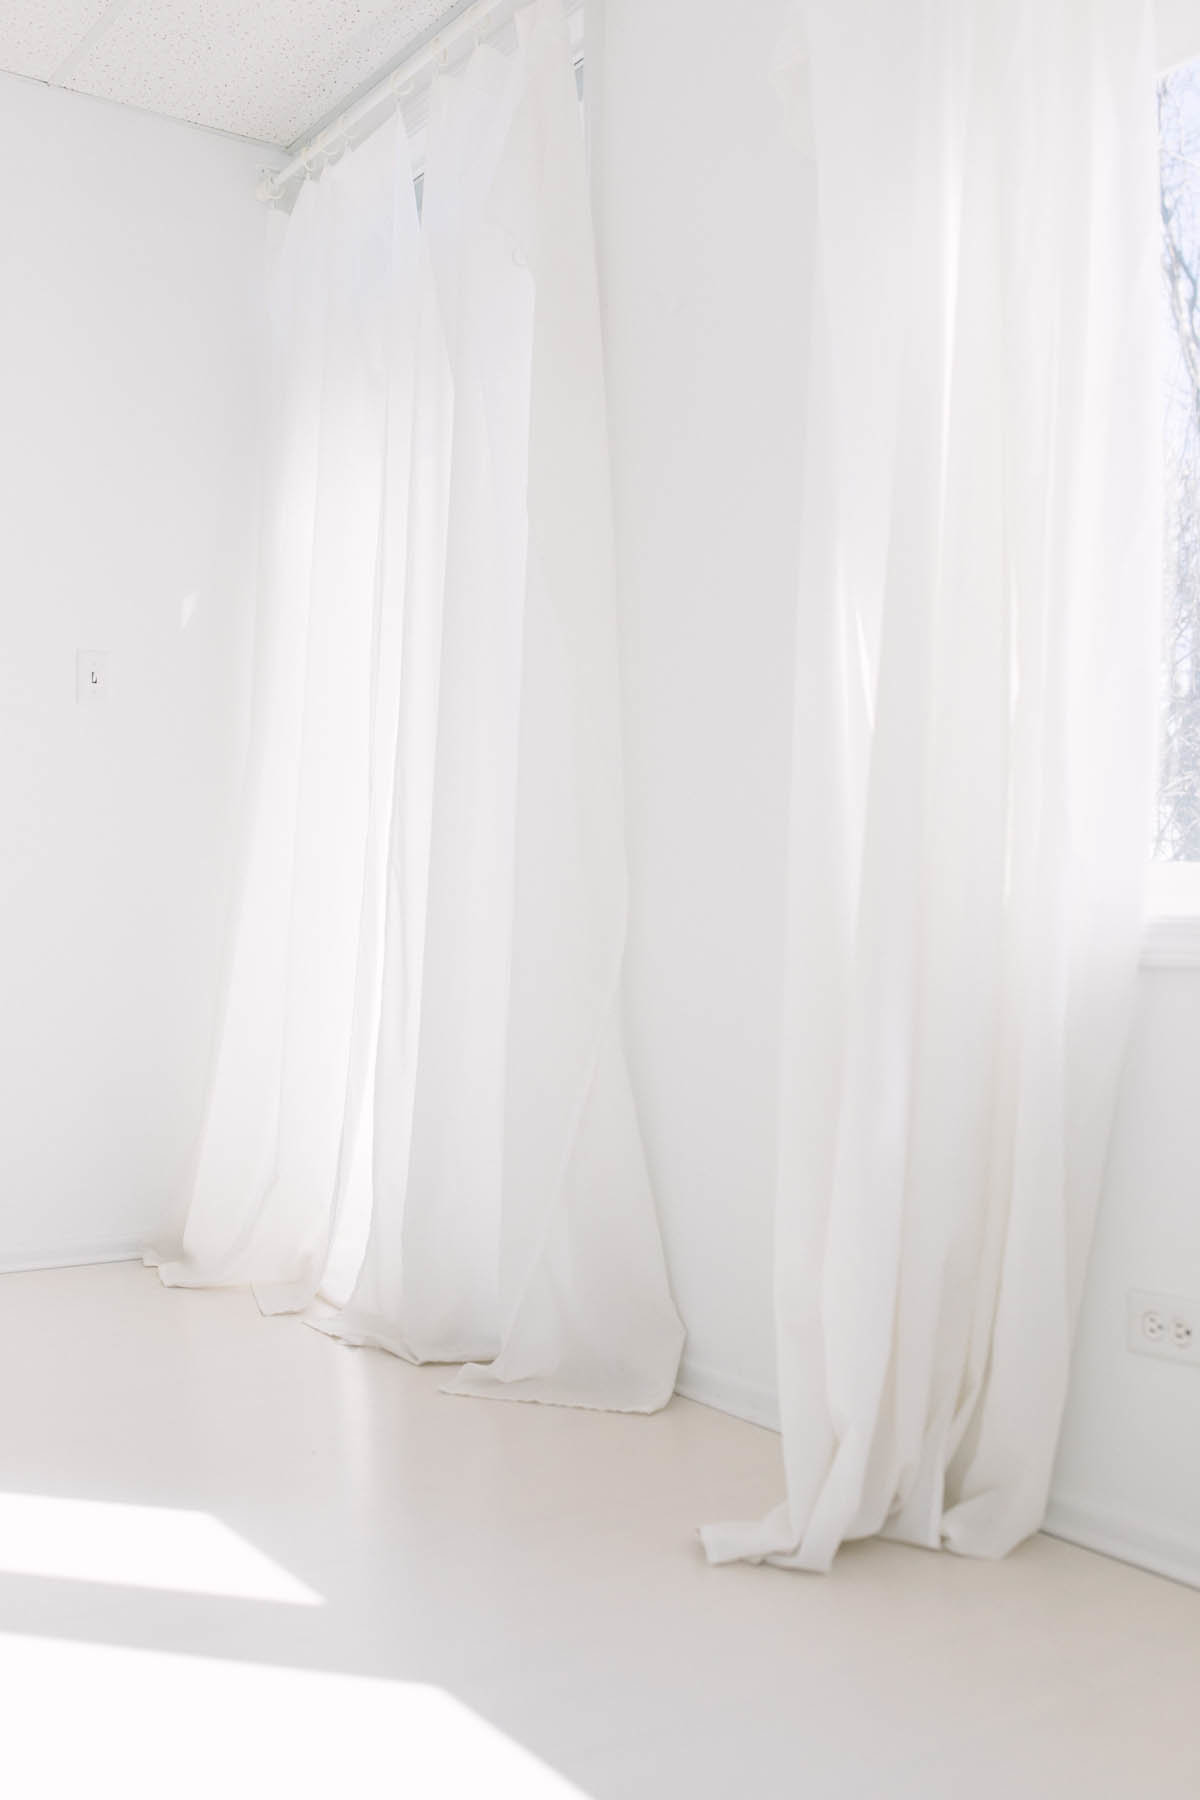 Boudoir by Elle shows her white natural light studio in Chicago